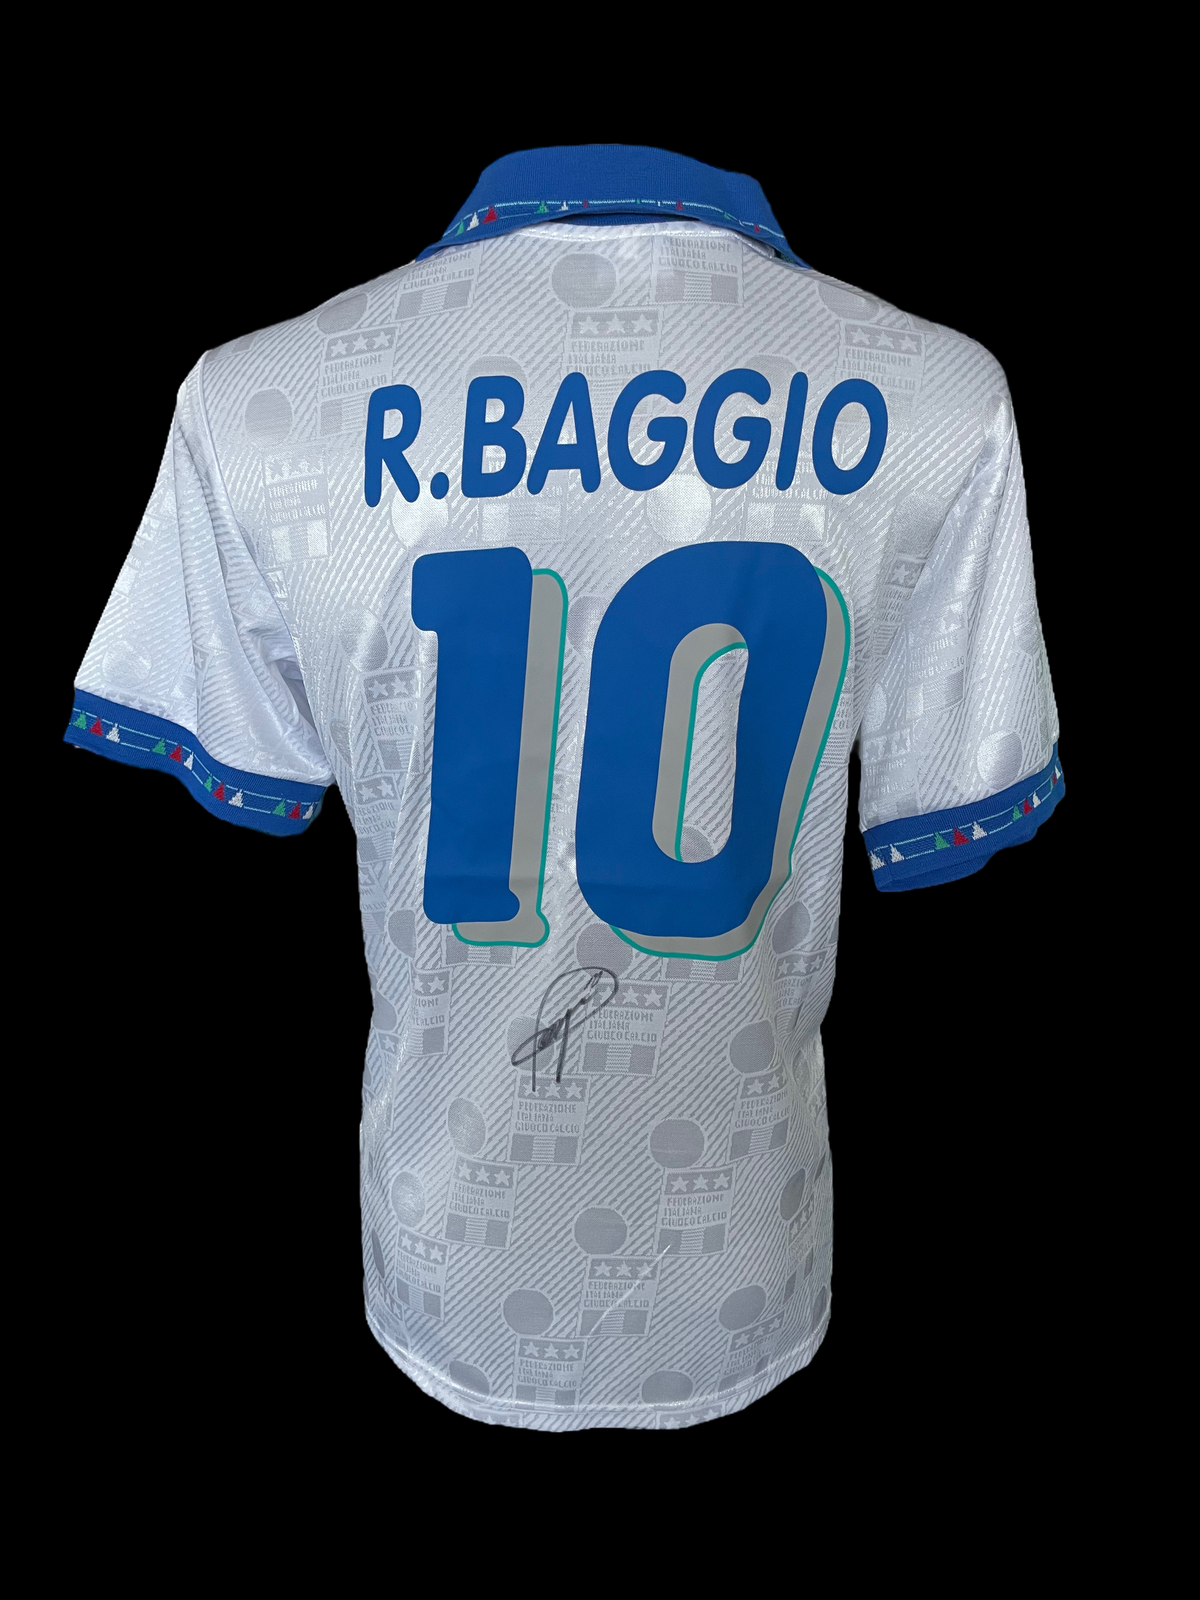 ROBERTO BAGGIO SIGNED 1994 ITALY WORLD CUP AWAY SHIRT (AFTAL COA)